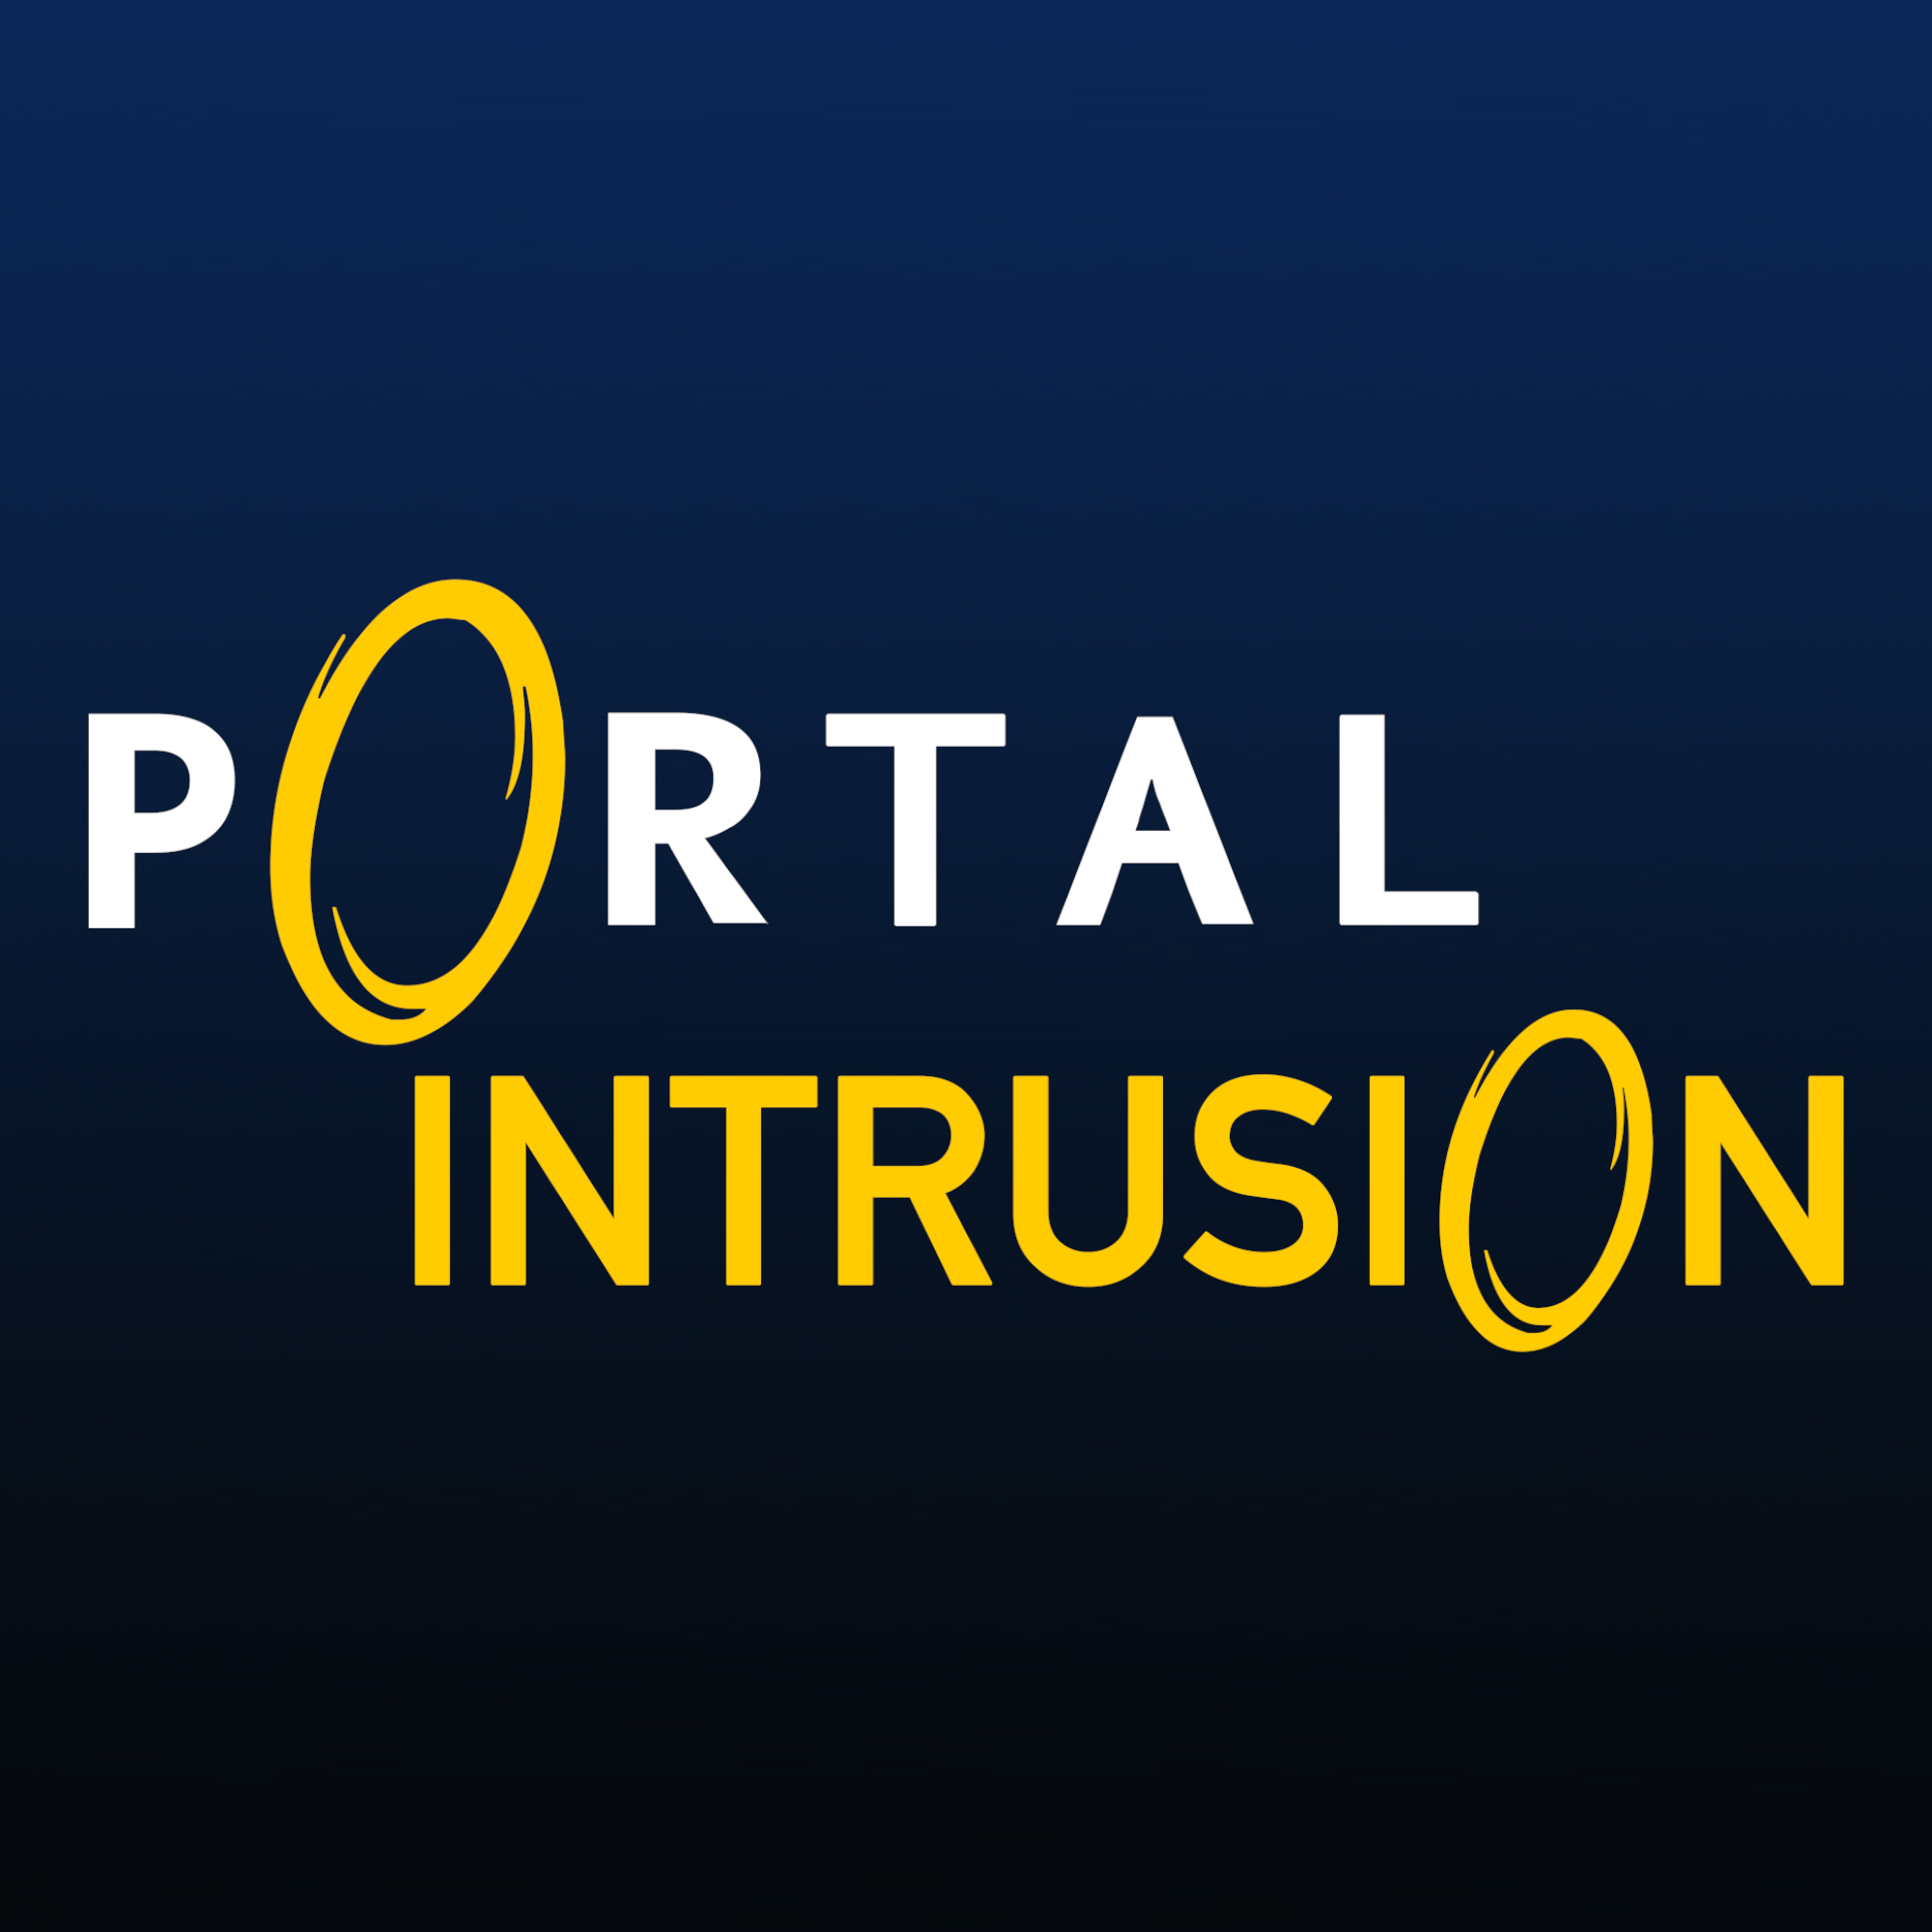 Portal: Intrusion